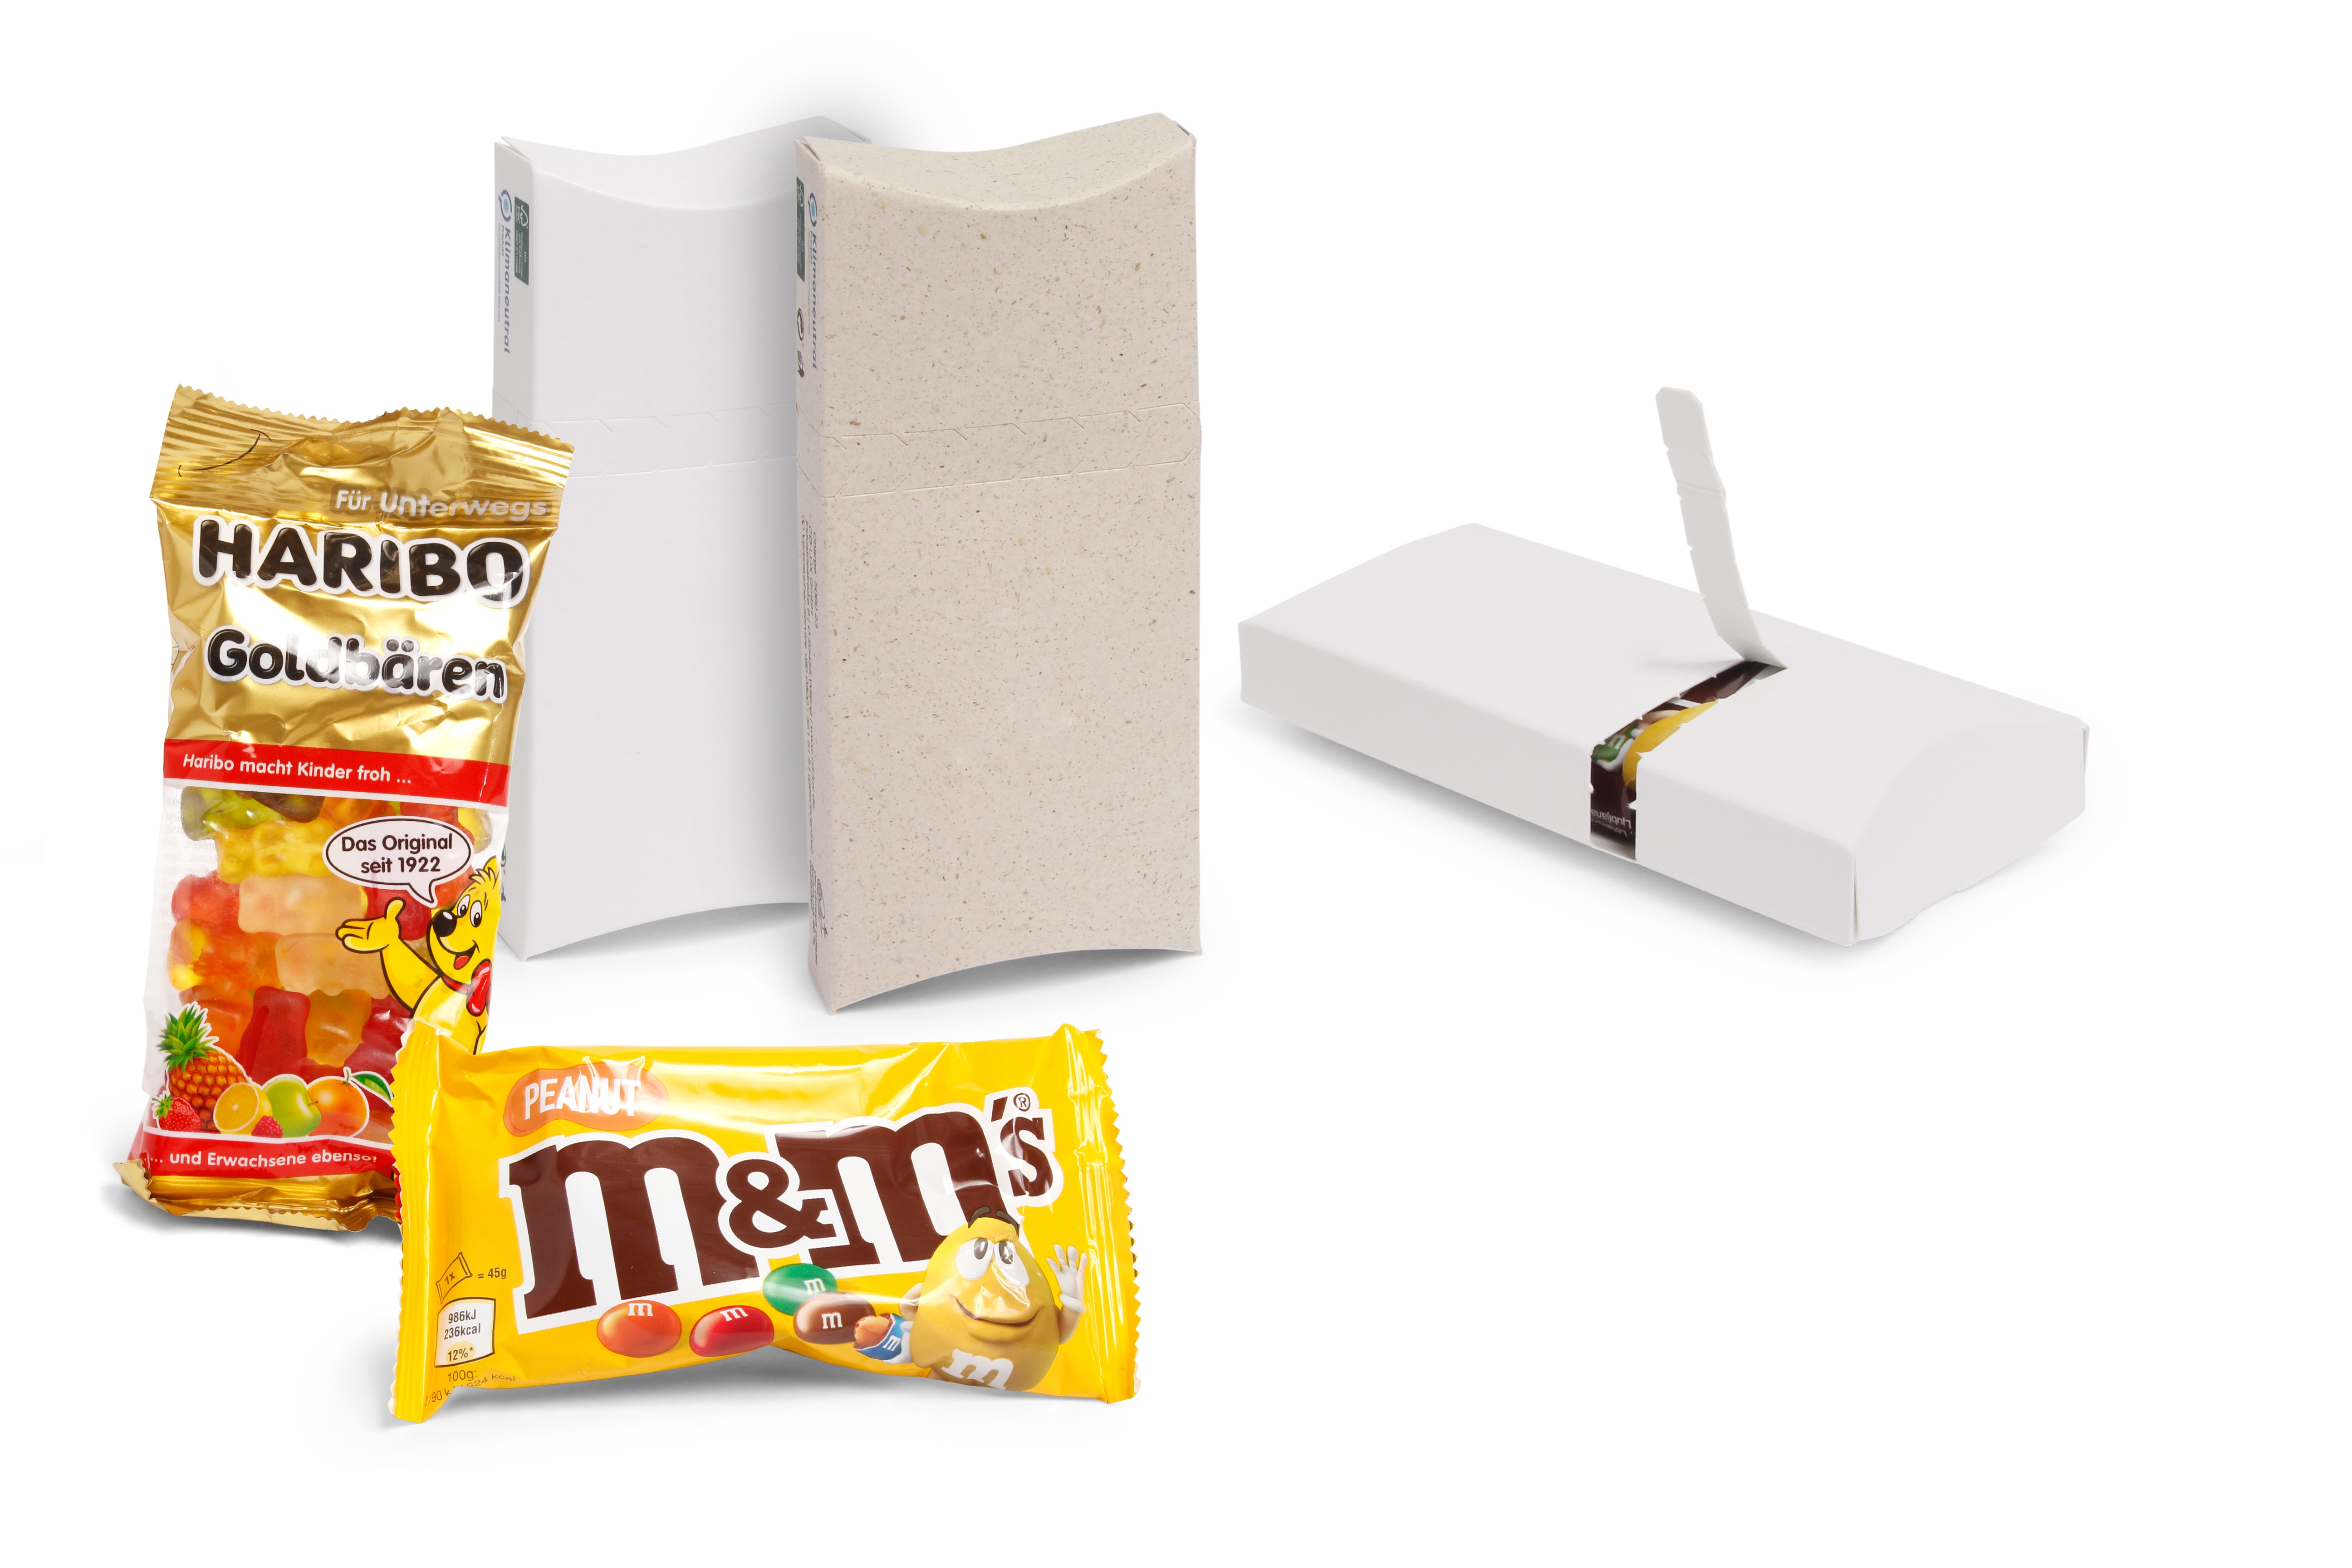 Snacks in Promotional Packaging